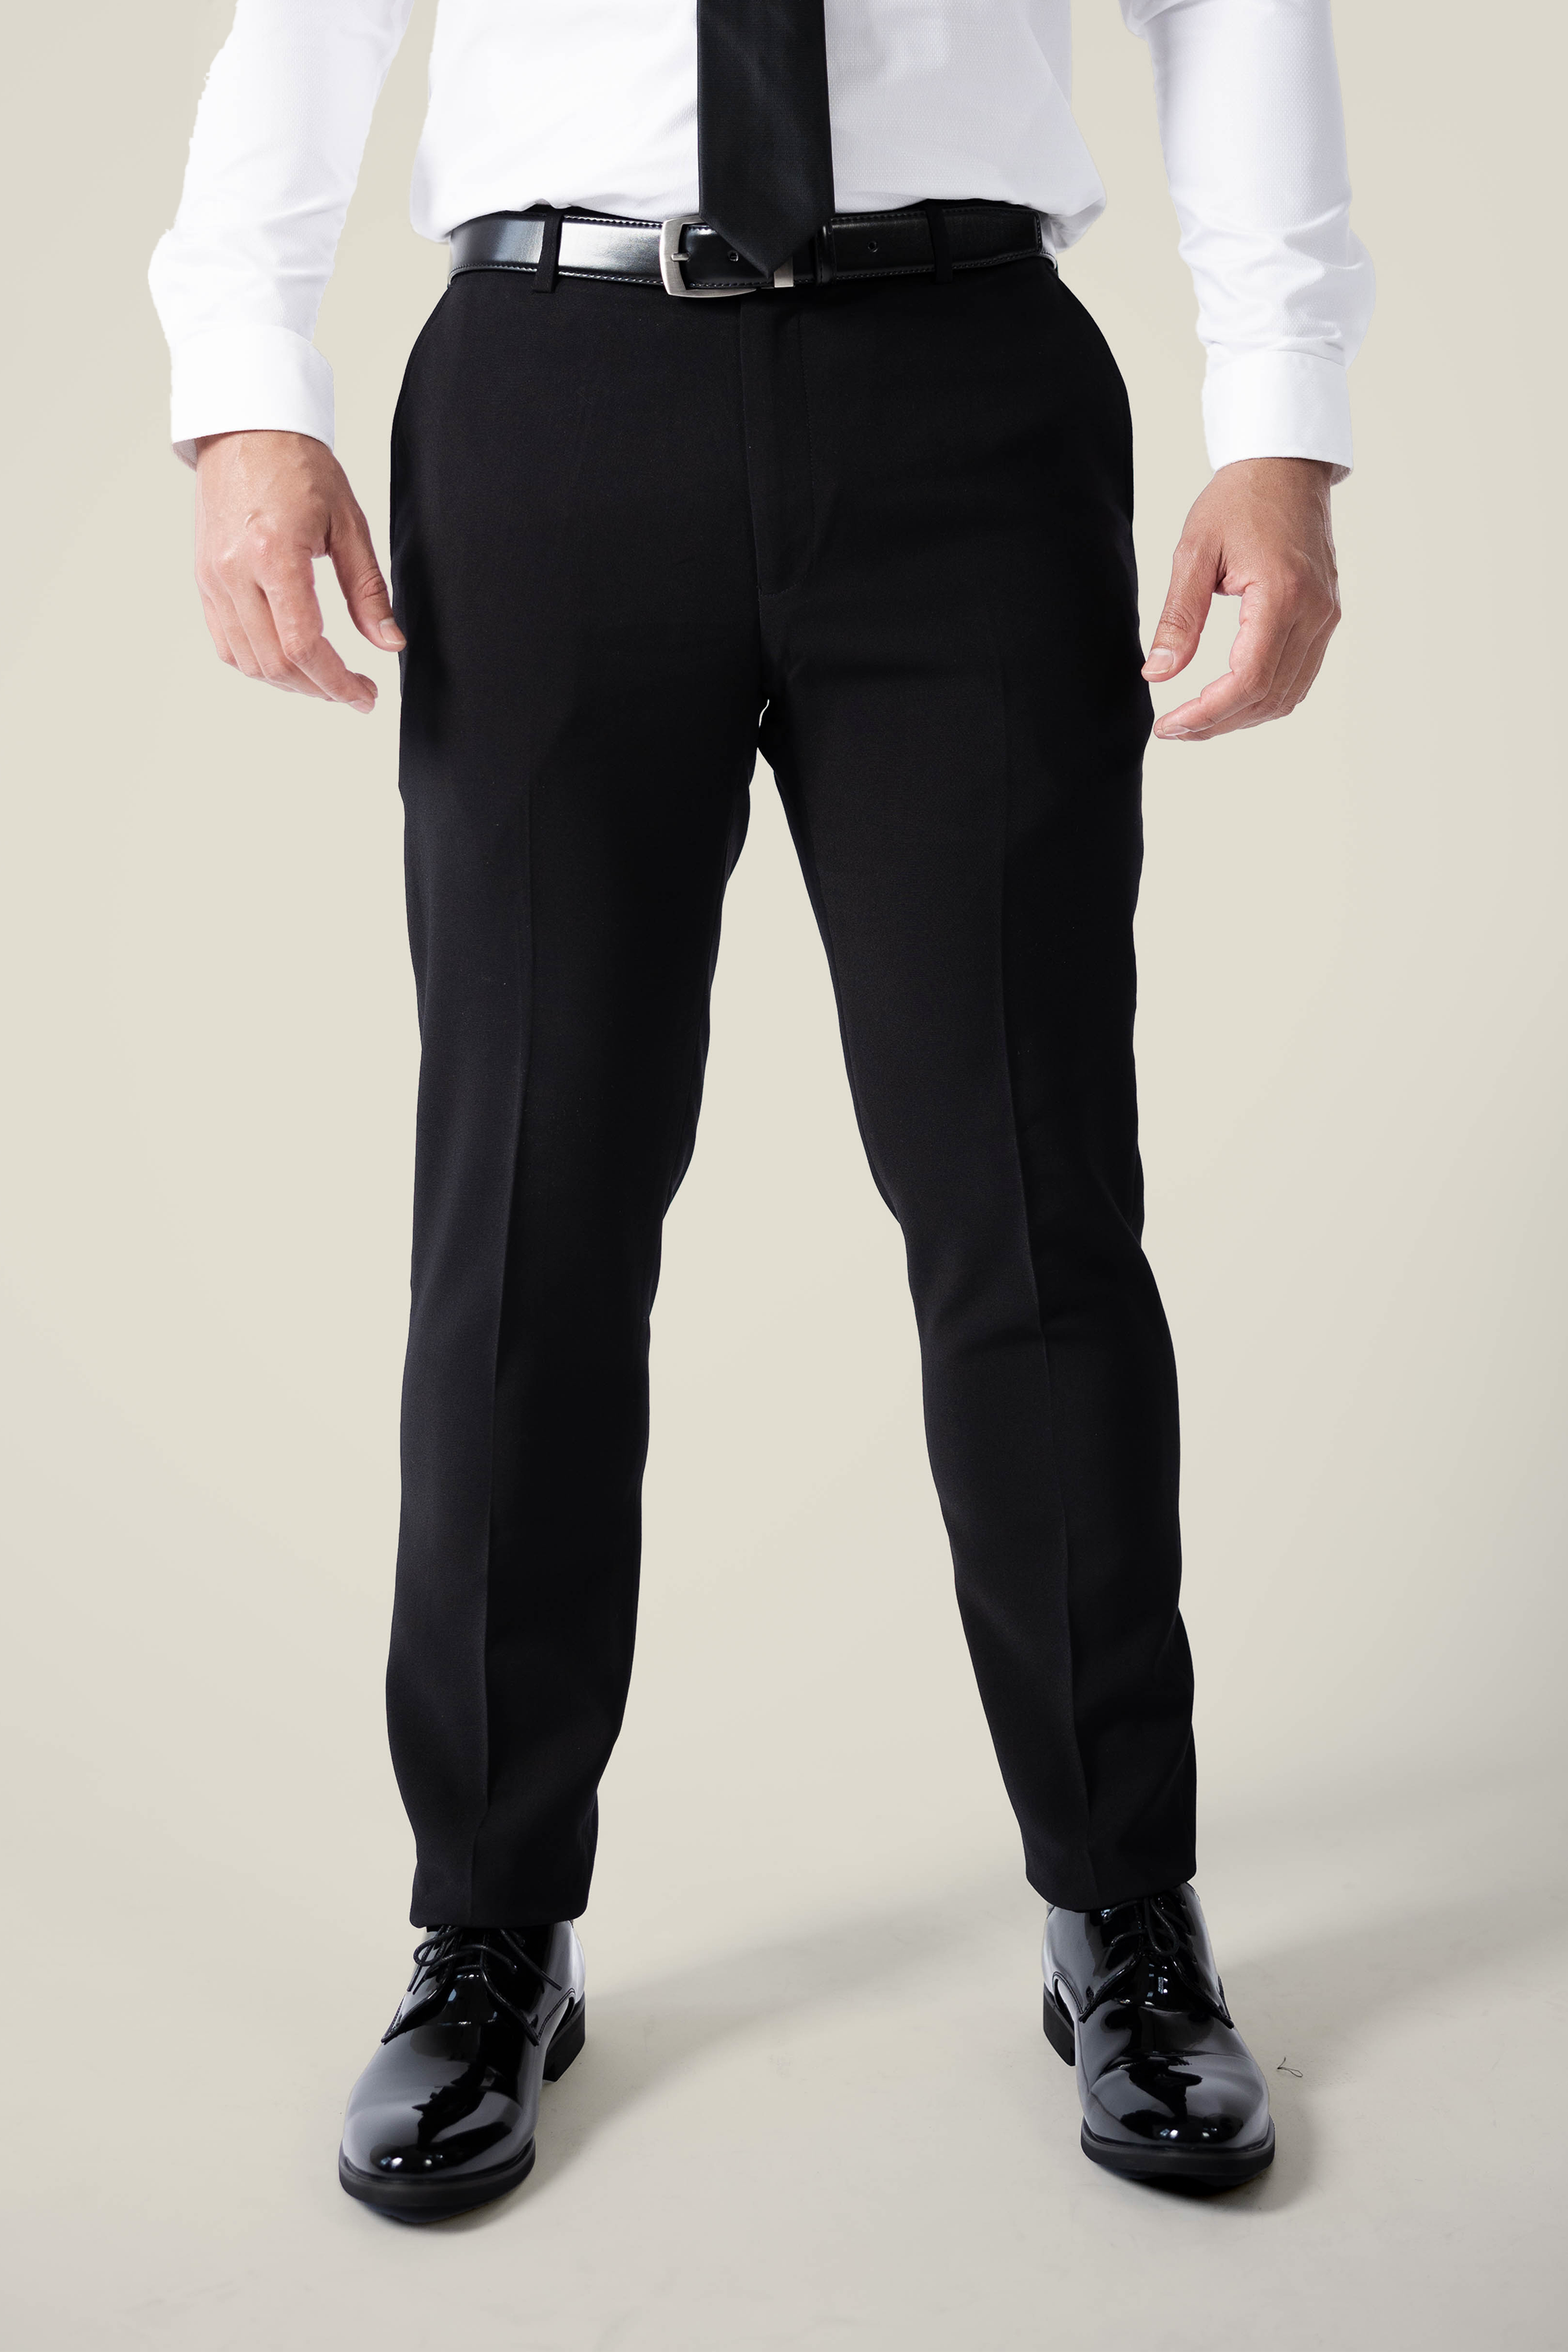 Men's Matte Black Trousers